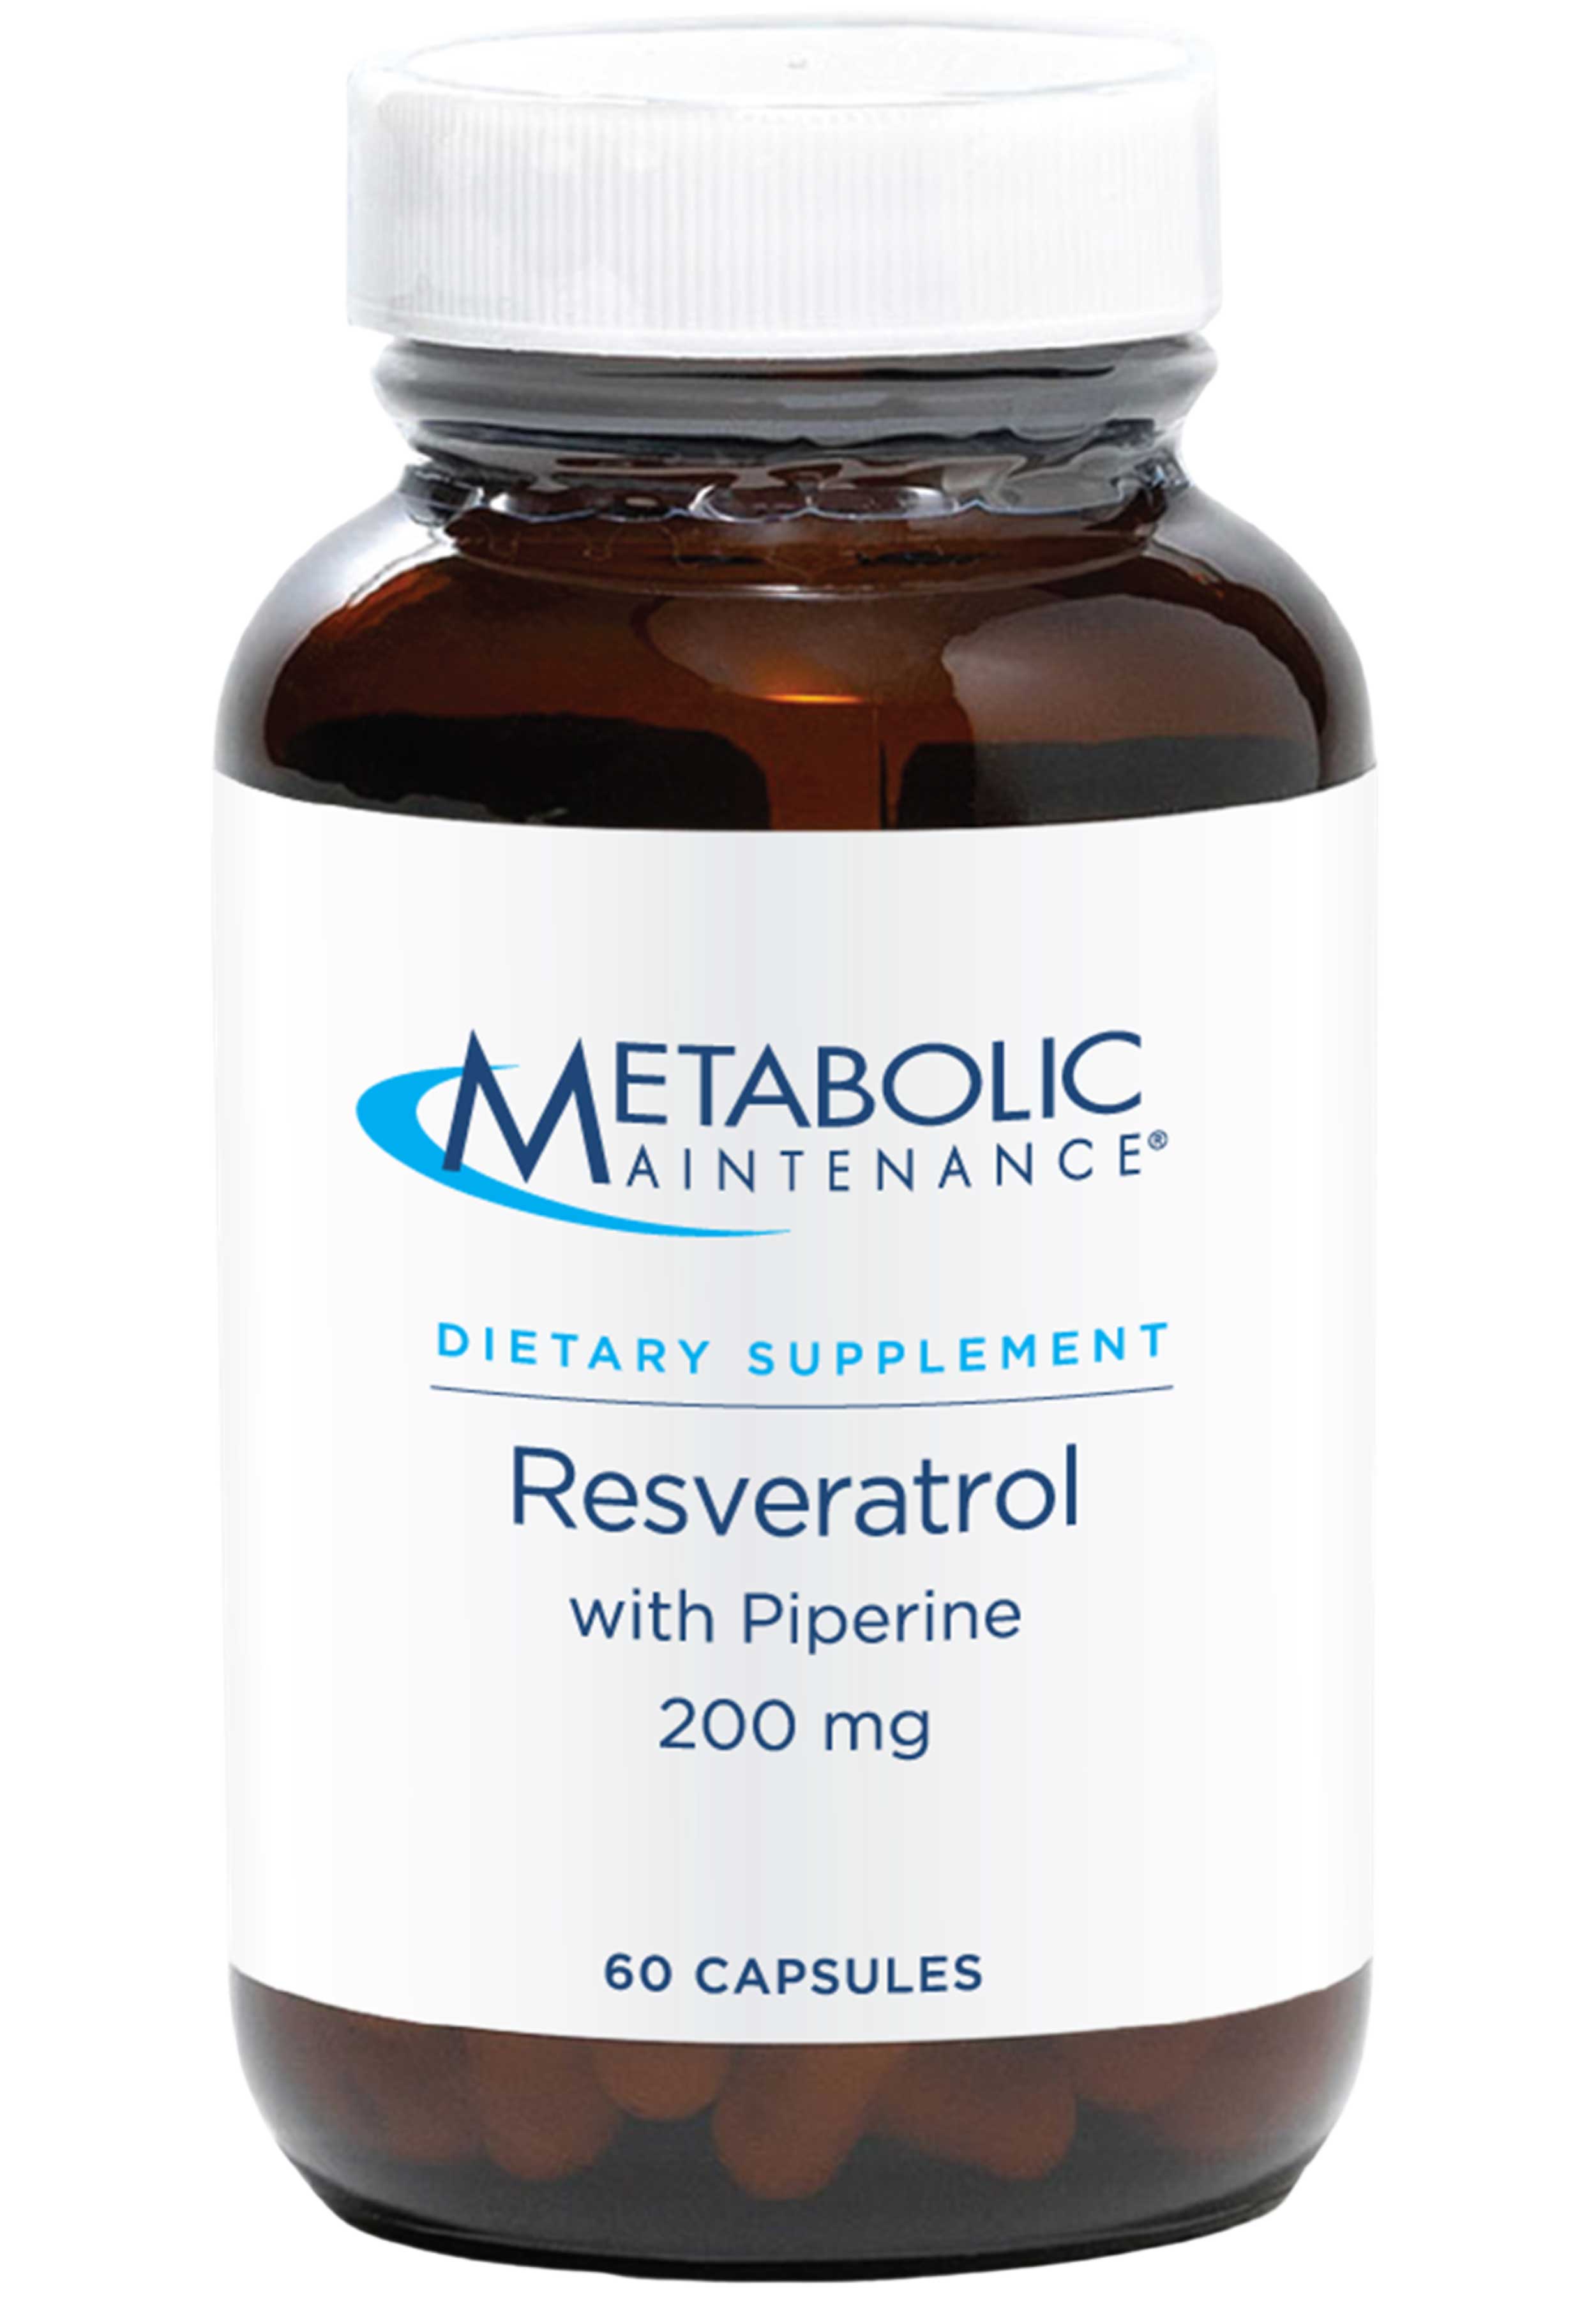 Metabolic Maintenance Resveratrol with Piperine 200 mg